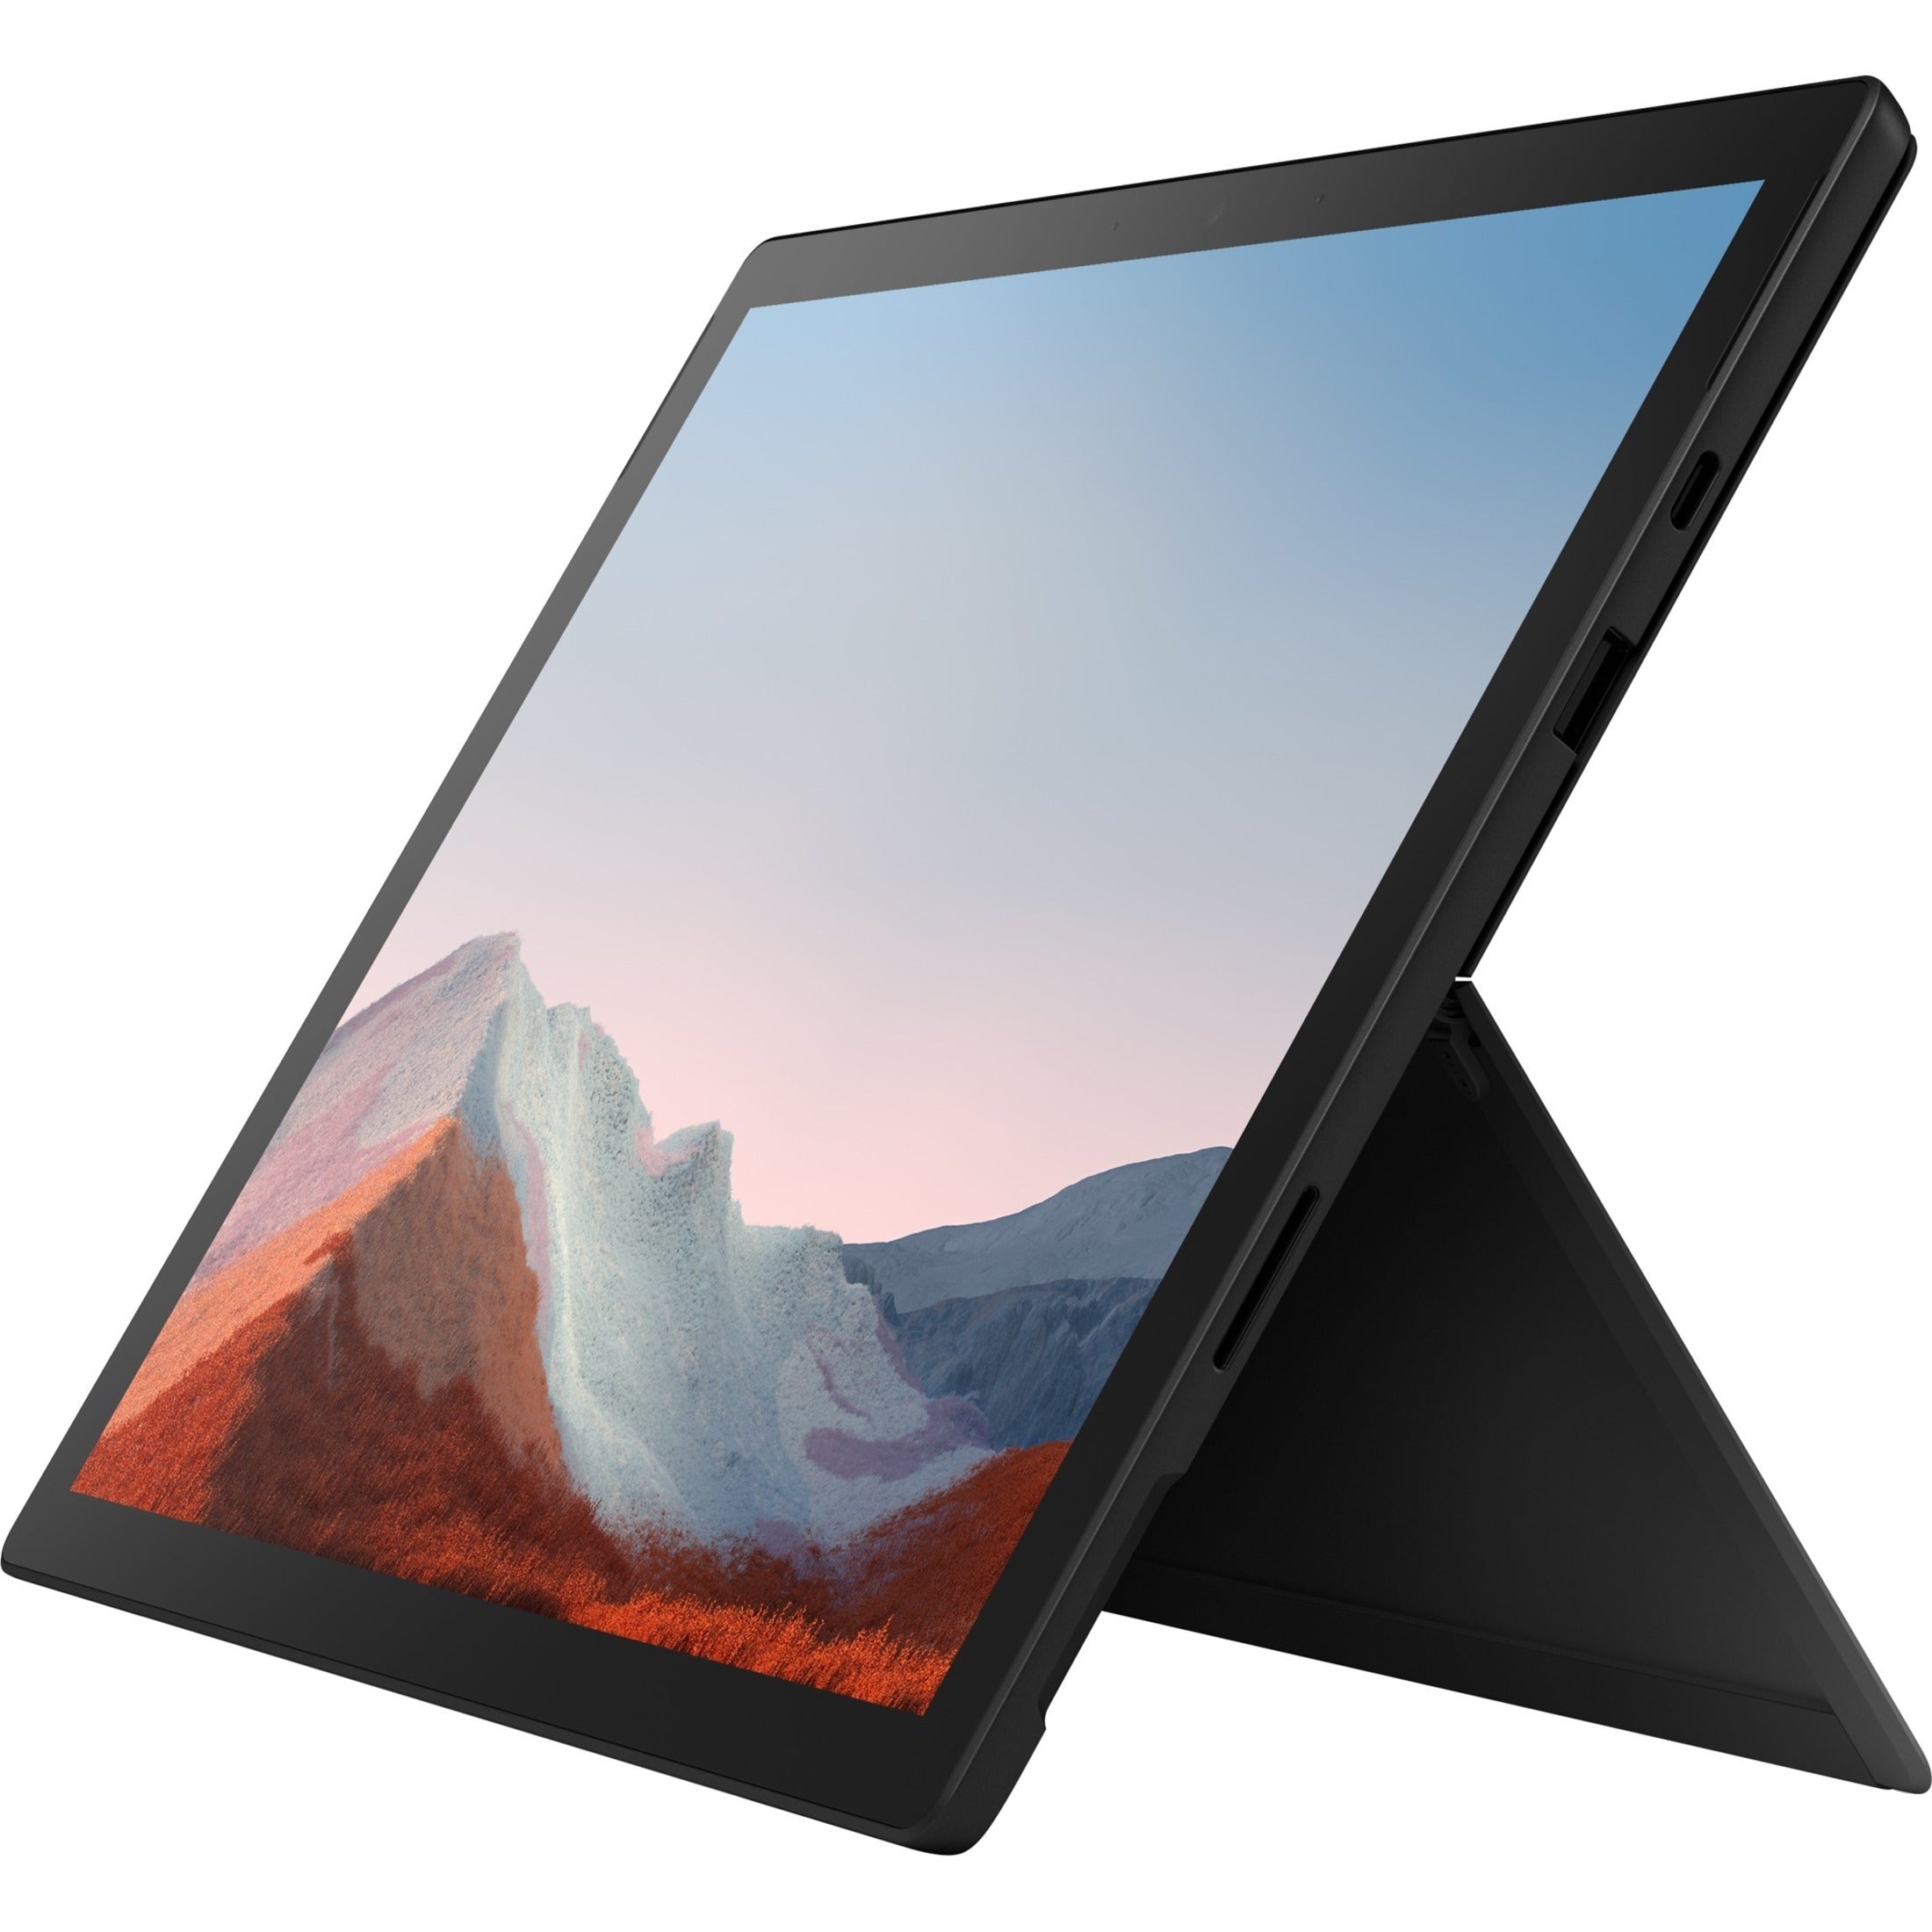 Microsoft 1XX-00002 Surface Pro 7+ Tablet, 12.3 PixelSense Display, Core i5, 8GB RAM, 256GB SSD, Windows 10 Pro